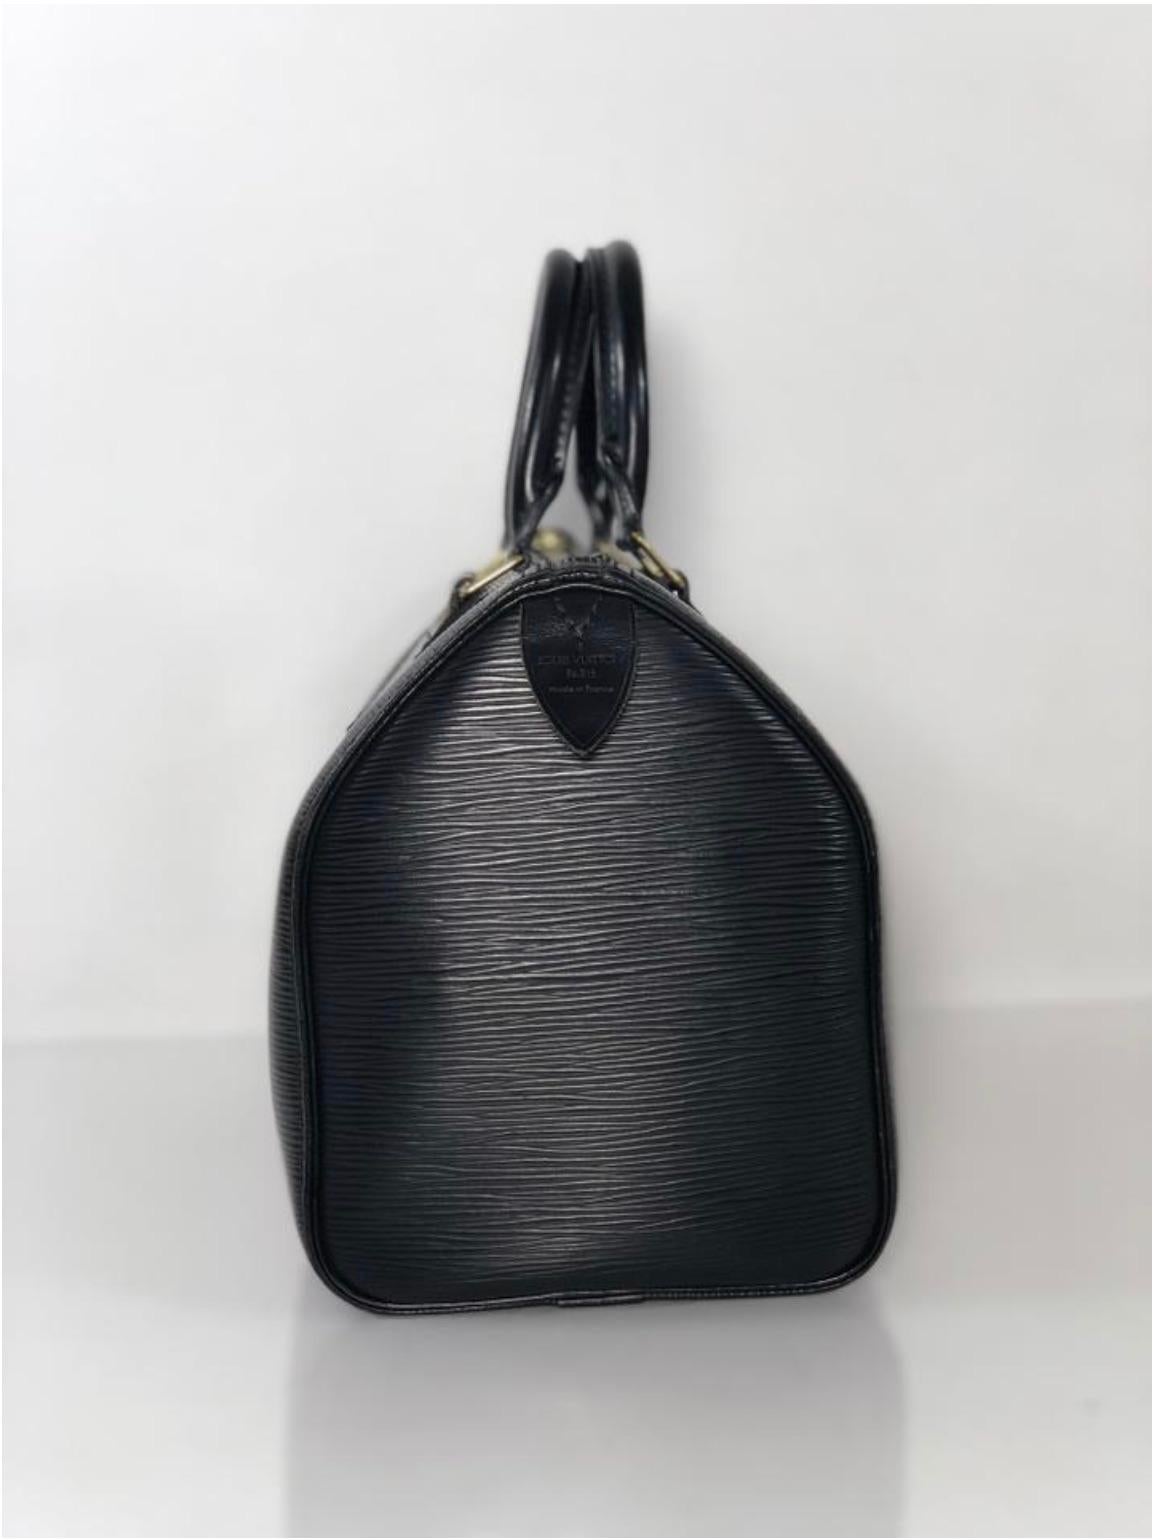 Louis Vuitton Epi Speedy 25 in Black Satchel Handbag In Good Condition For Sale In Saint Charles, IL